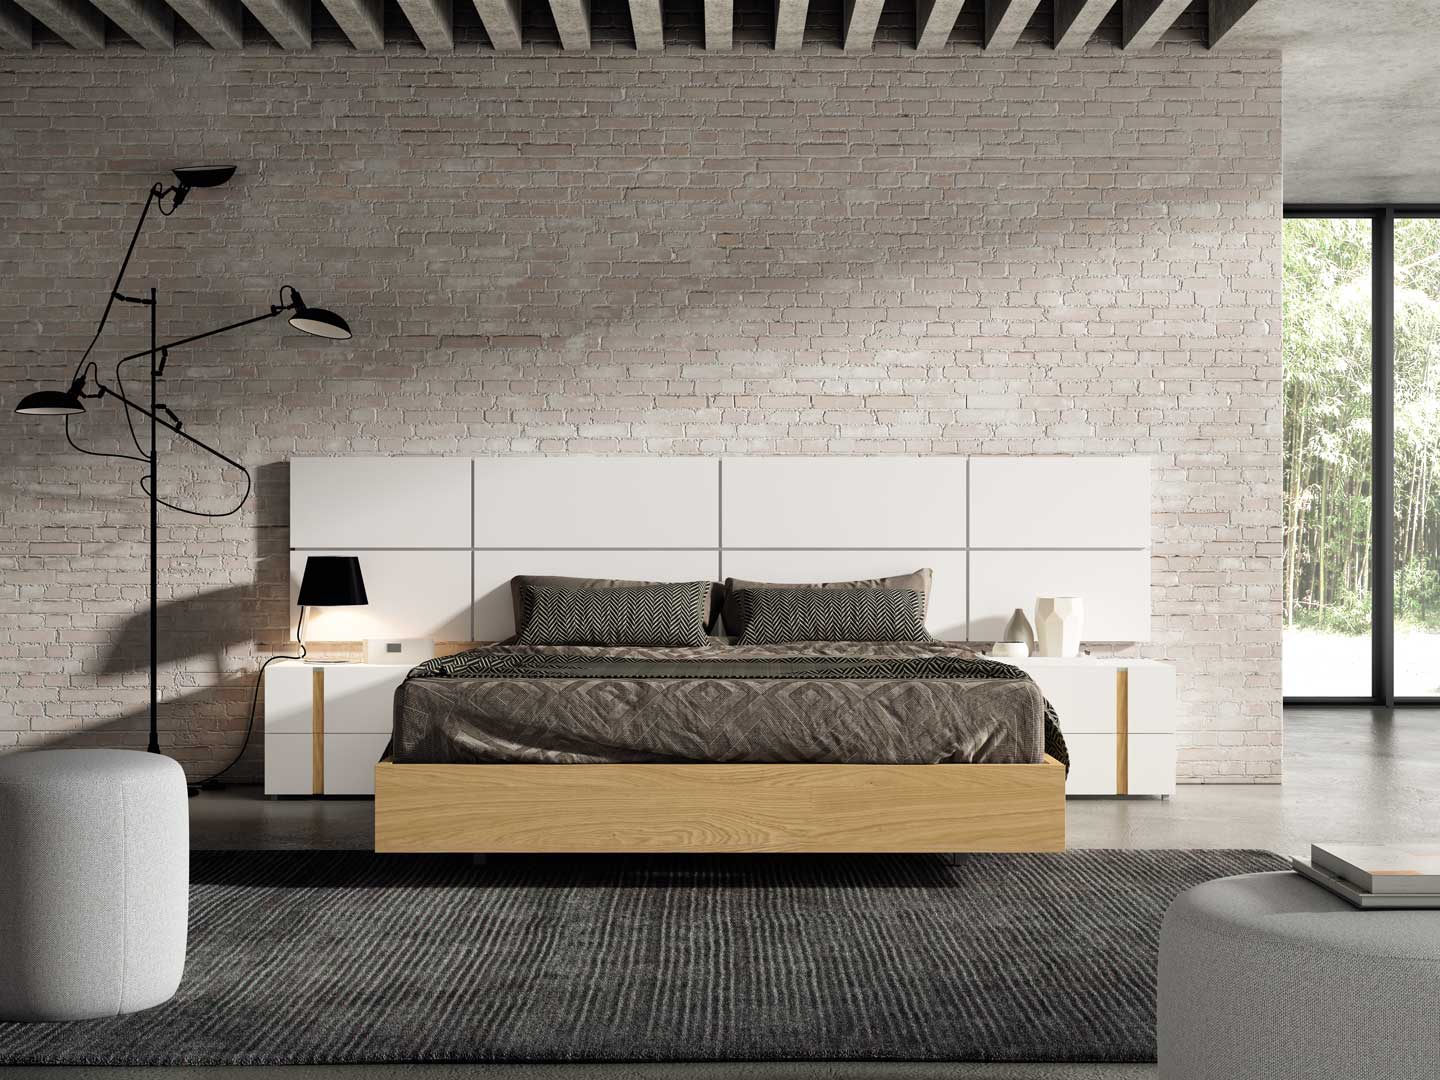 https://penalvamobiliari.com/wp-content/uploads/2021/10/dormitorio-moderno-con-muebles-antiguos.jpg